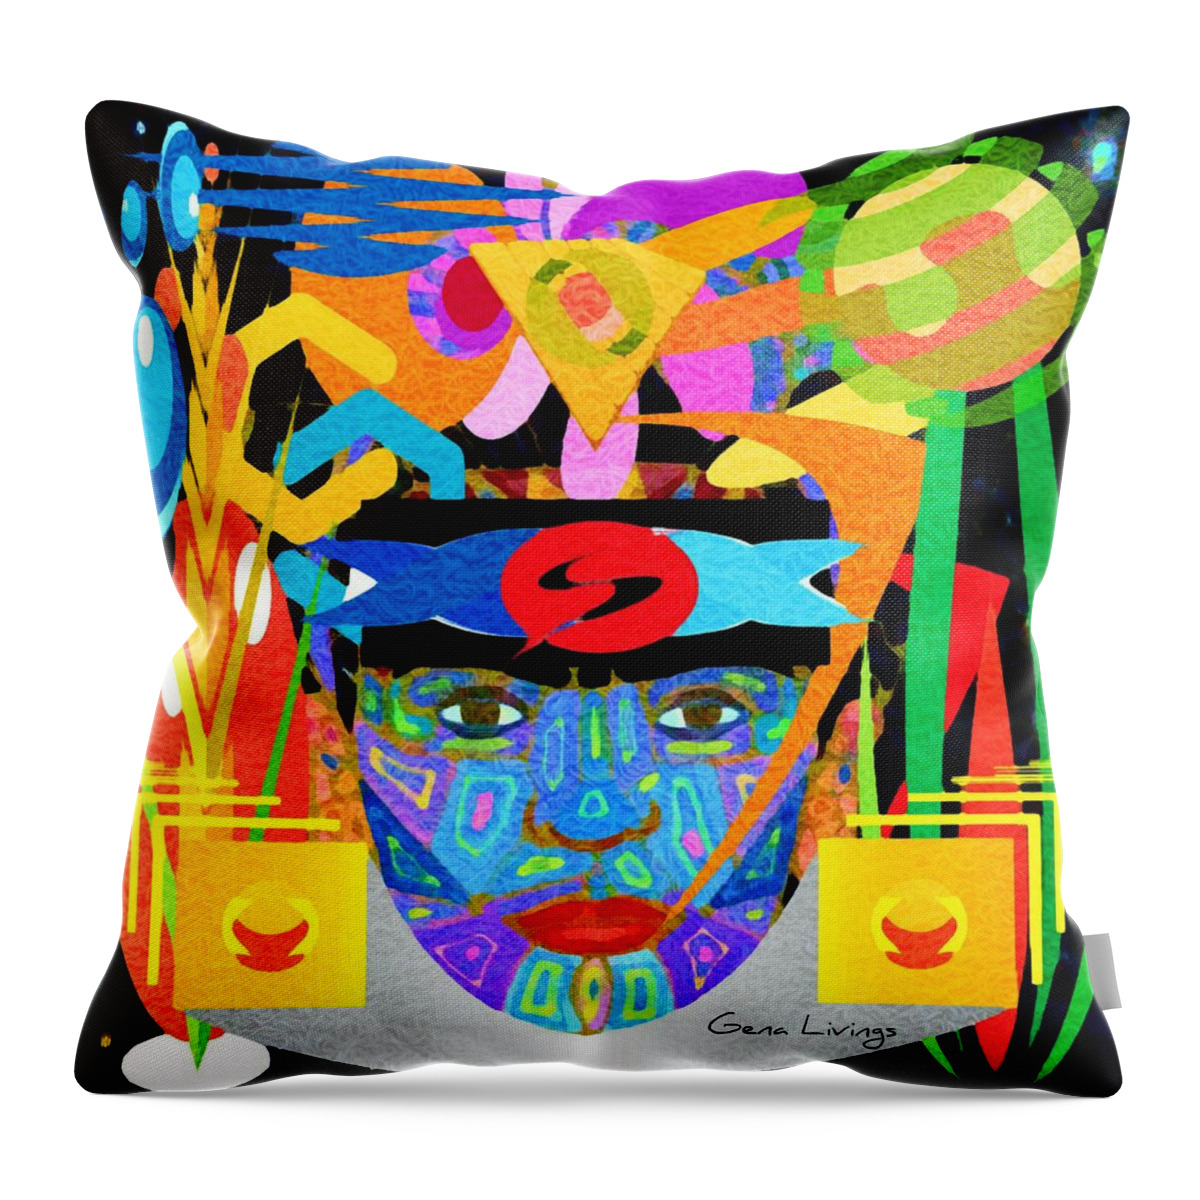 Goddess Throw Pillow featuring the mixed media Zara by Gena Livings